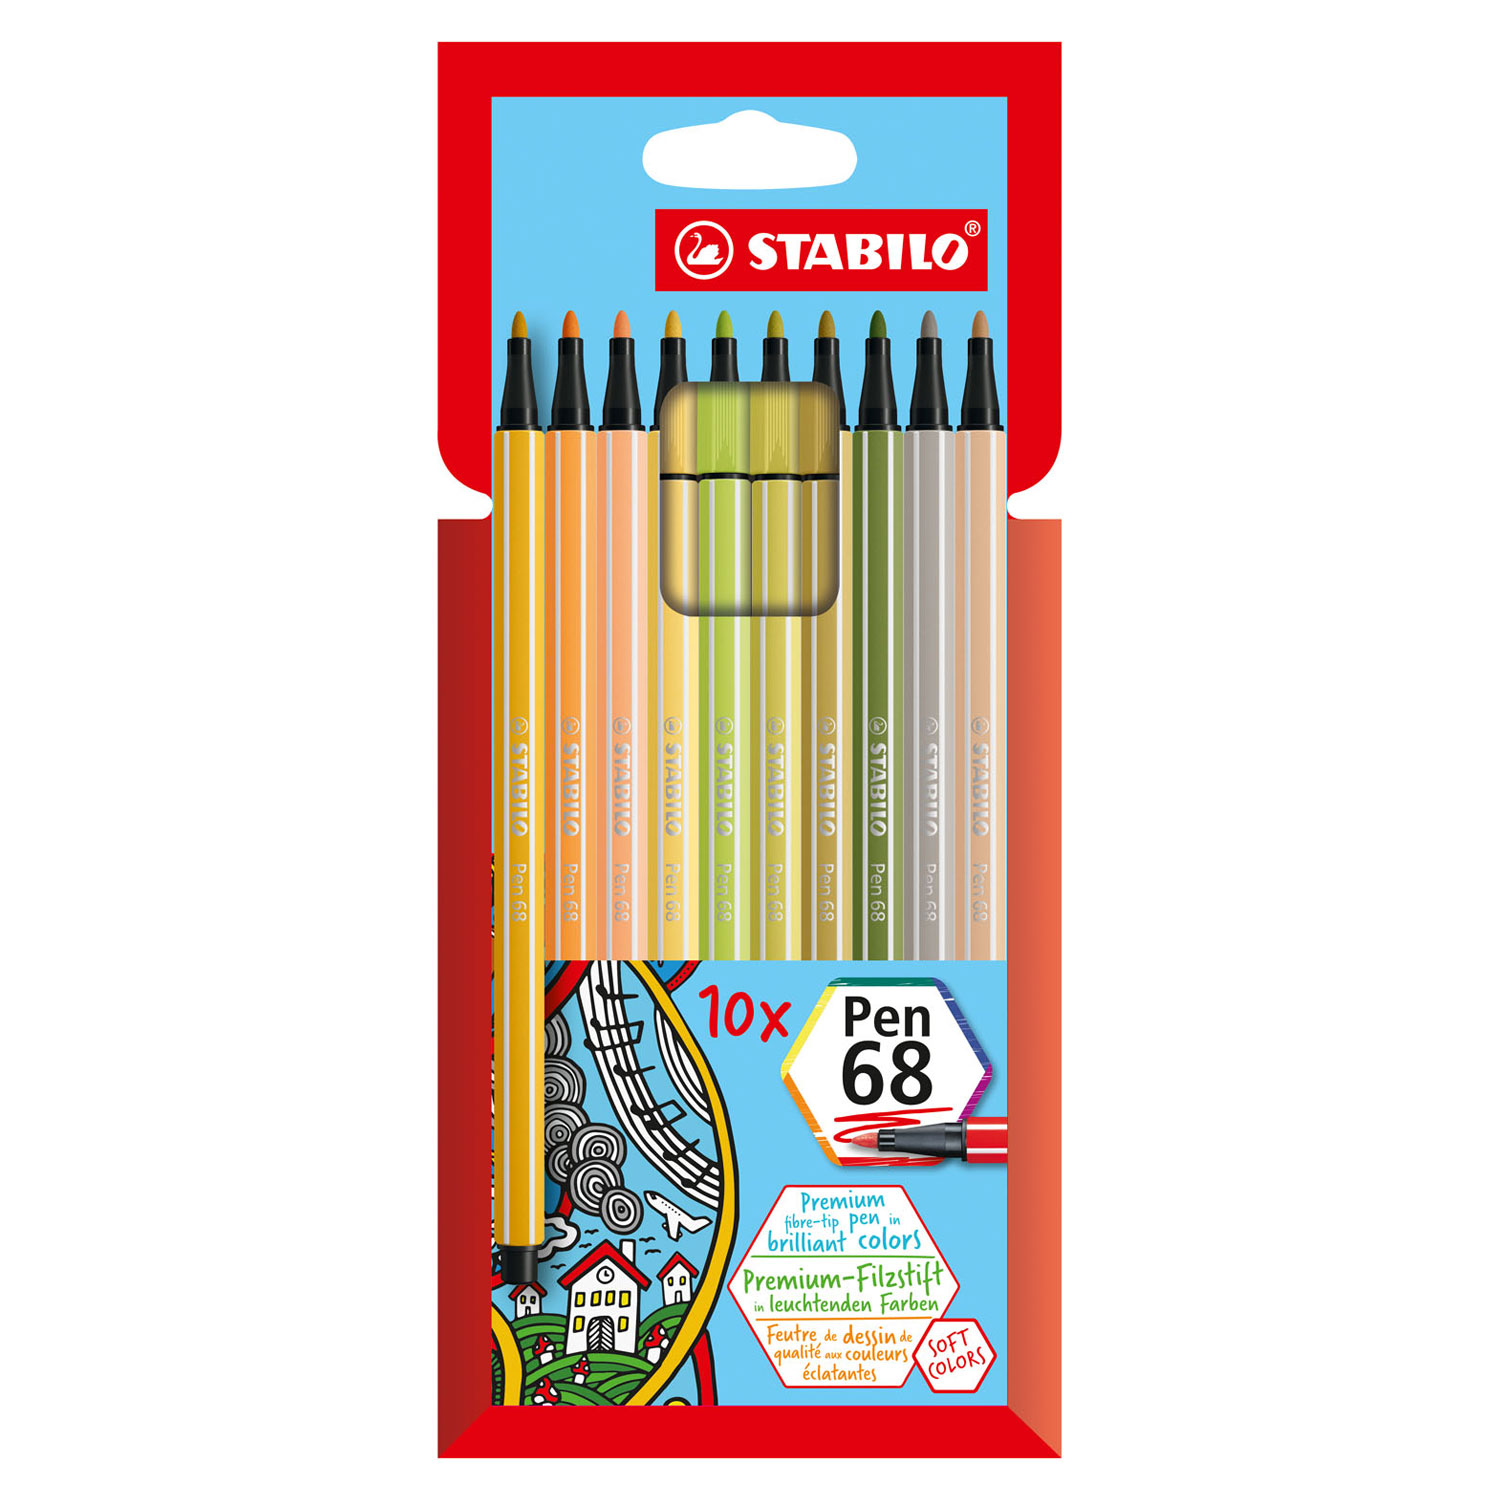 Idool Denken Lauw STABILO Pen 68 Felt-tip pens, 10 pcs. | Thimble Toys